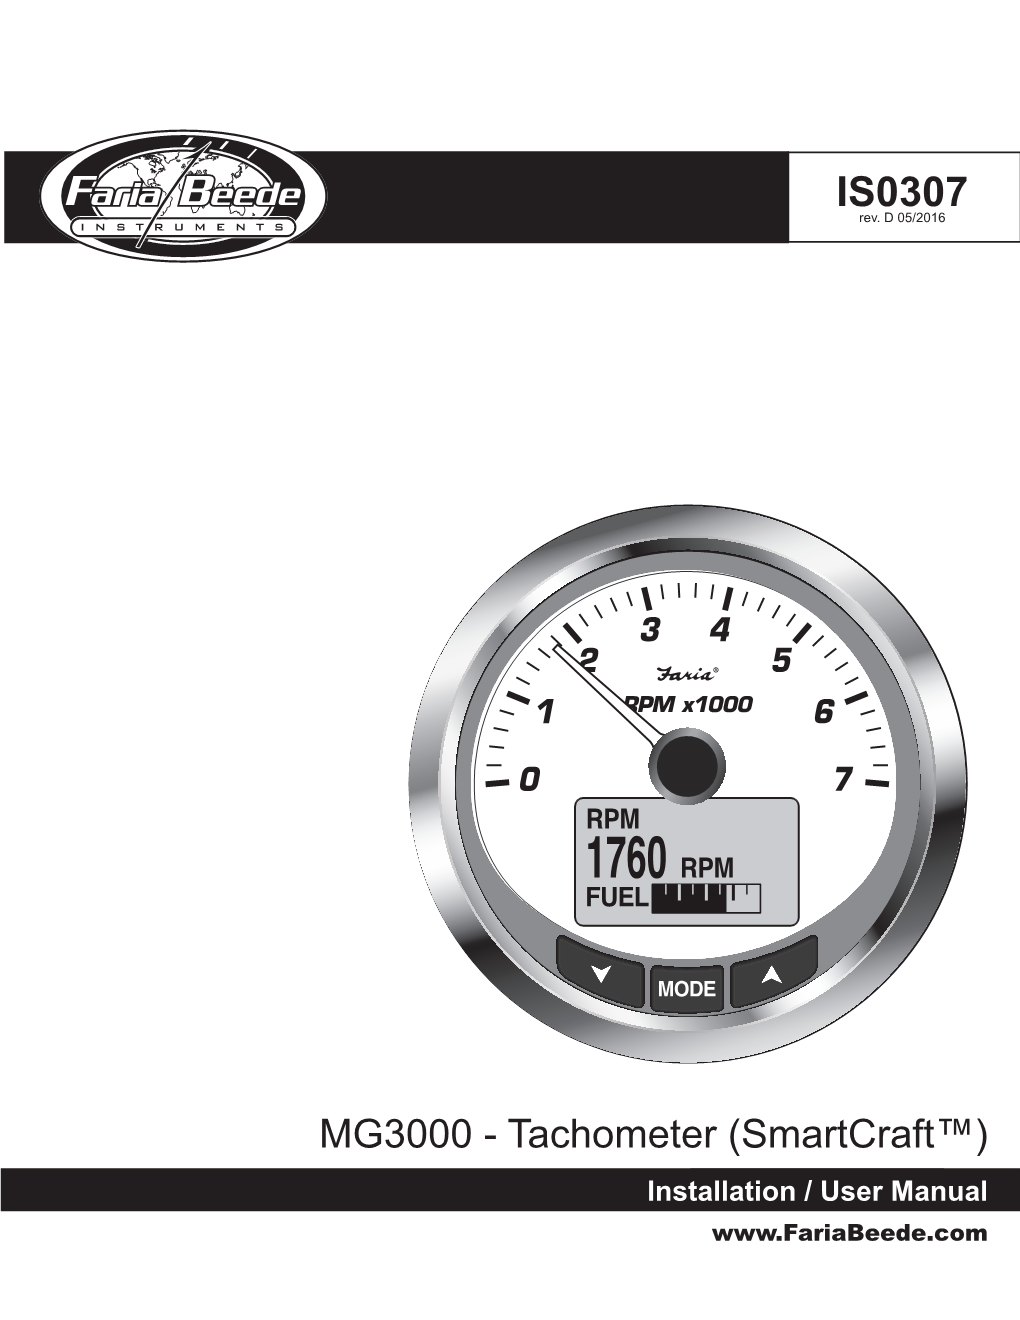 Tachometer (Smartcraft™) Installation / User Manual